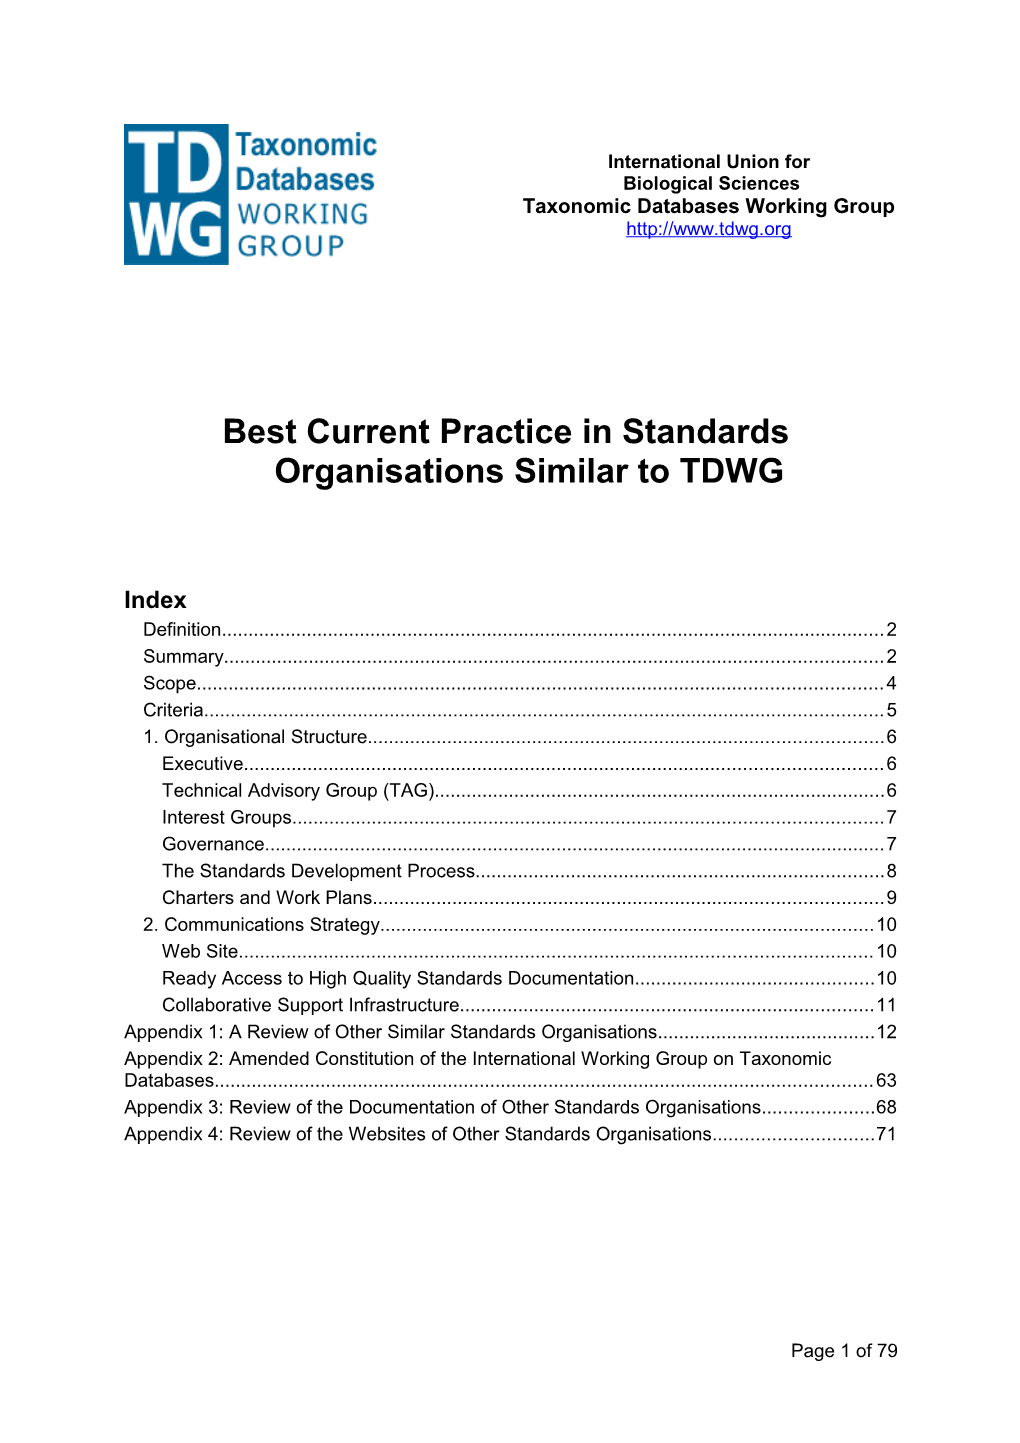 Best Current Practice in Standards Organisations Similar to TDWG